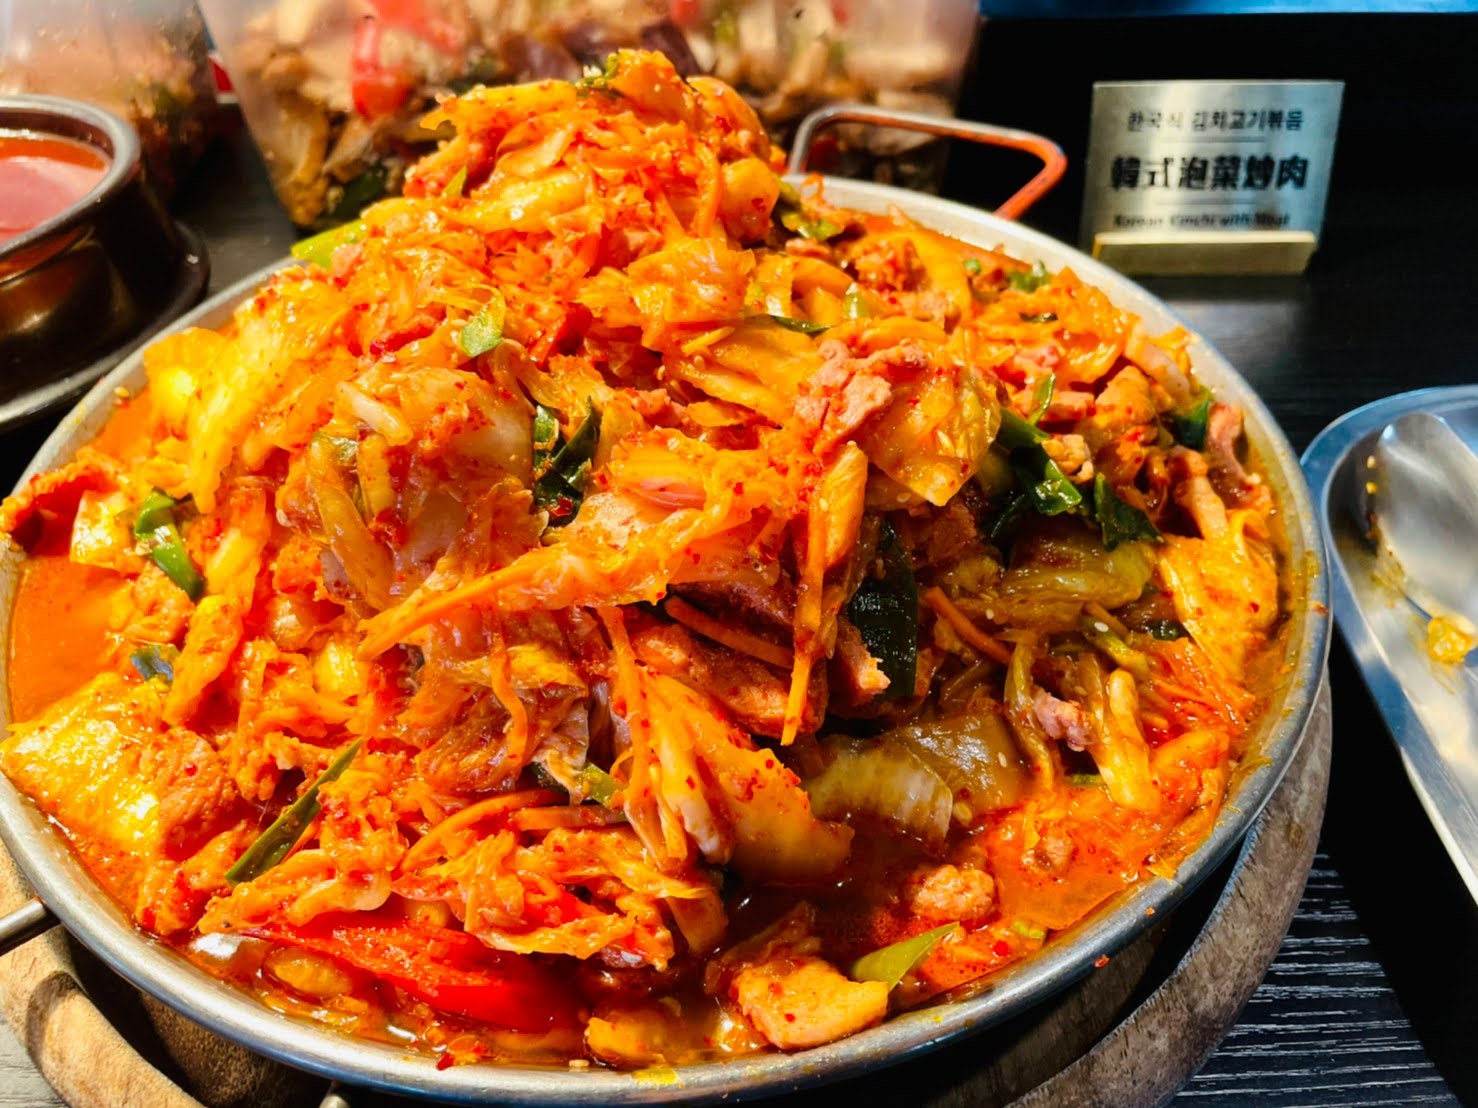 kimchi, 김치 韓式泡菜 台北西門町美食 韓式炸雞 泡菜 豆腐鍋 烤肉吃到飽